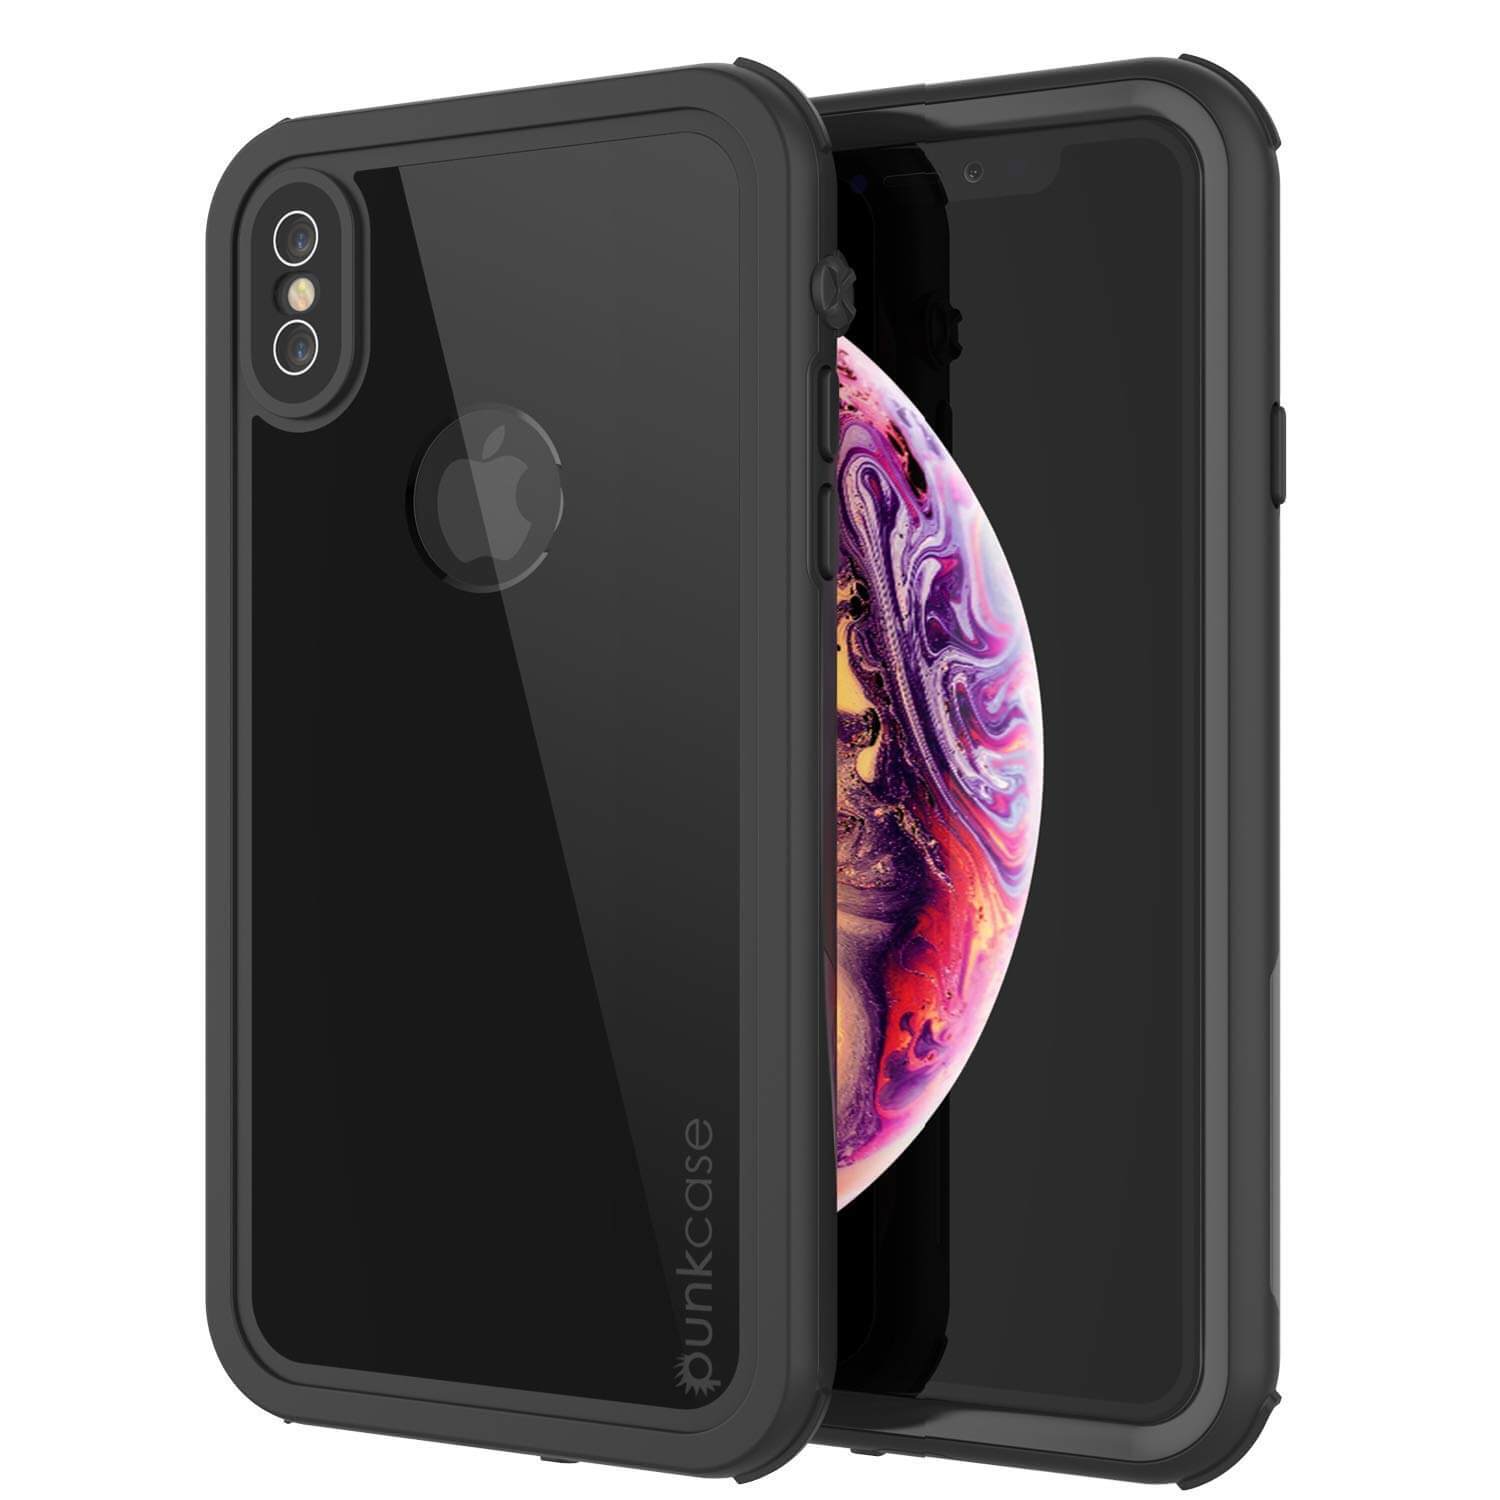 iPhone XS Waterproof IP68 Case, Punkcase [Shiny Black] [Rapture Series]  W/Built in Screen Protector